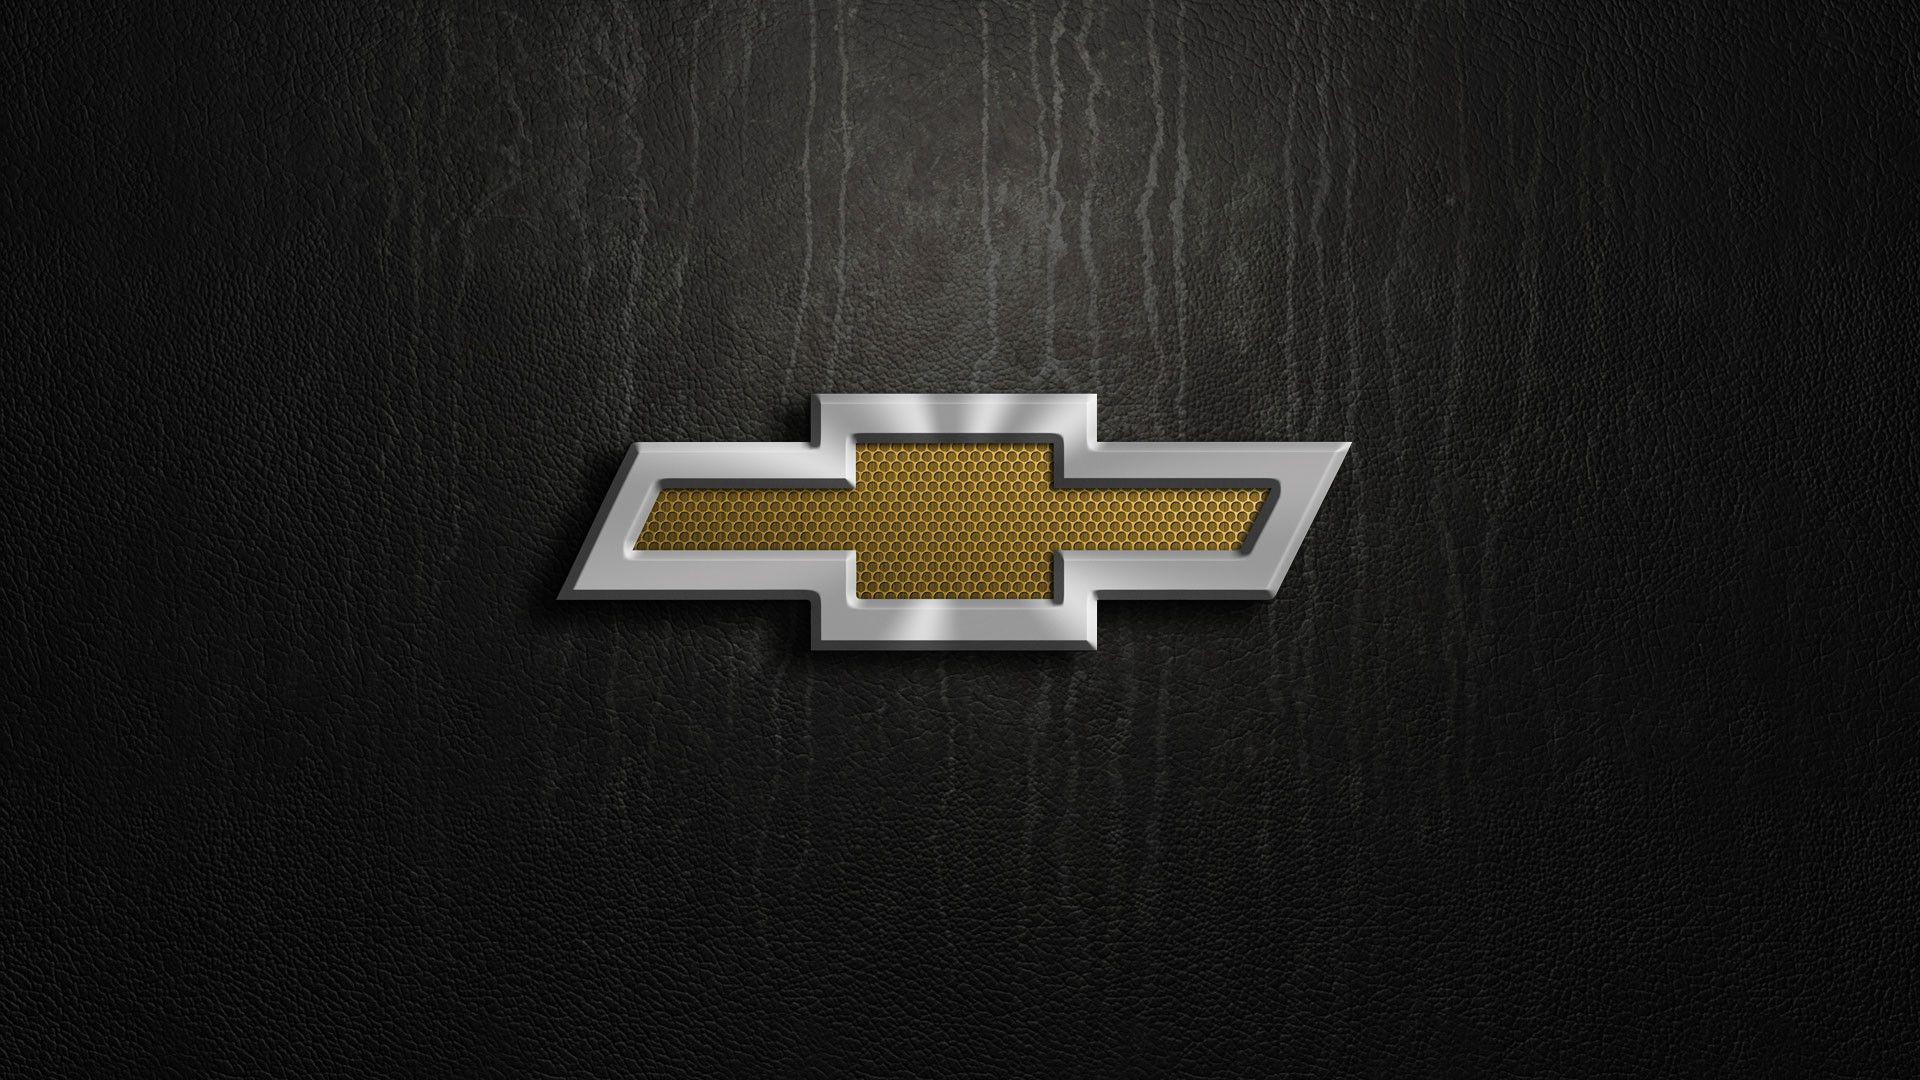 HD Chevy Logo Wallpaper